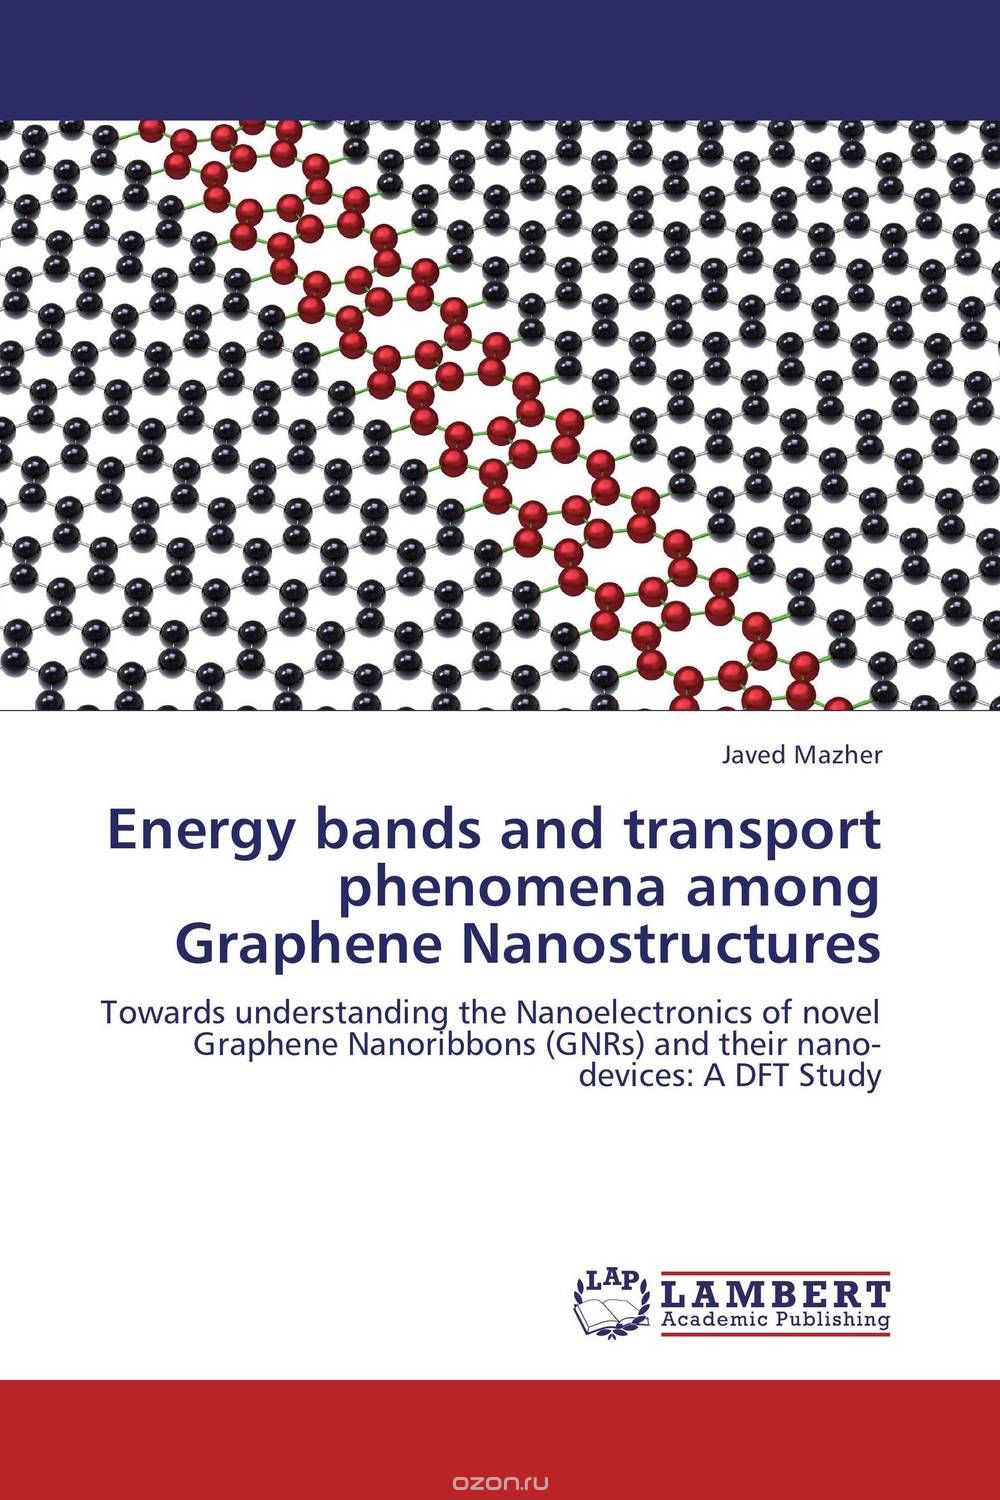 Скачать книгу "Energy bands and transport phenomena among Graphene Nanostructures"